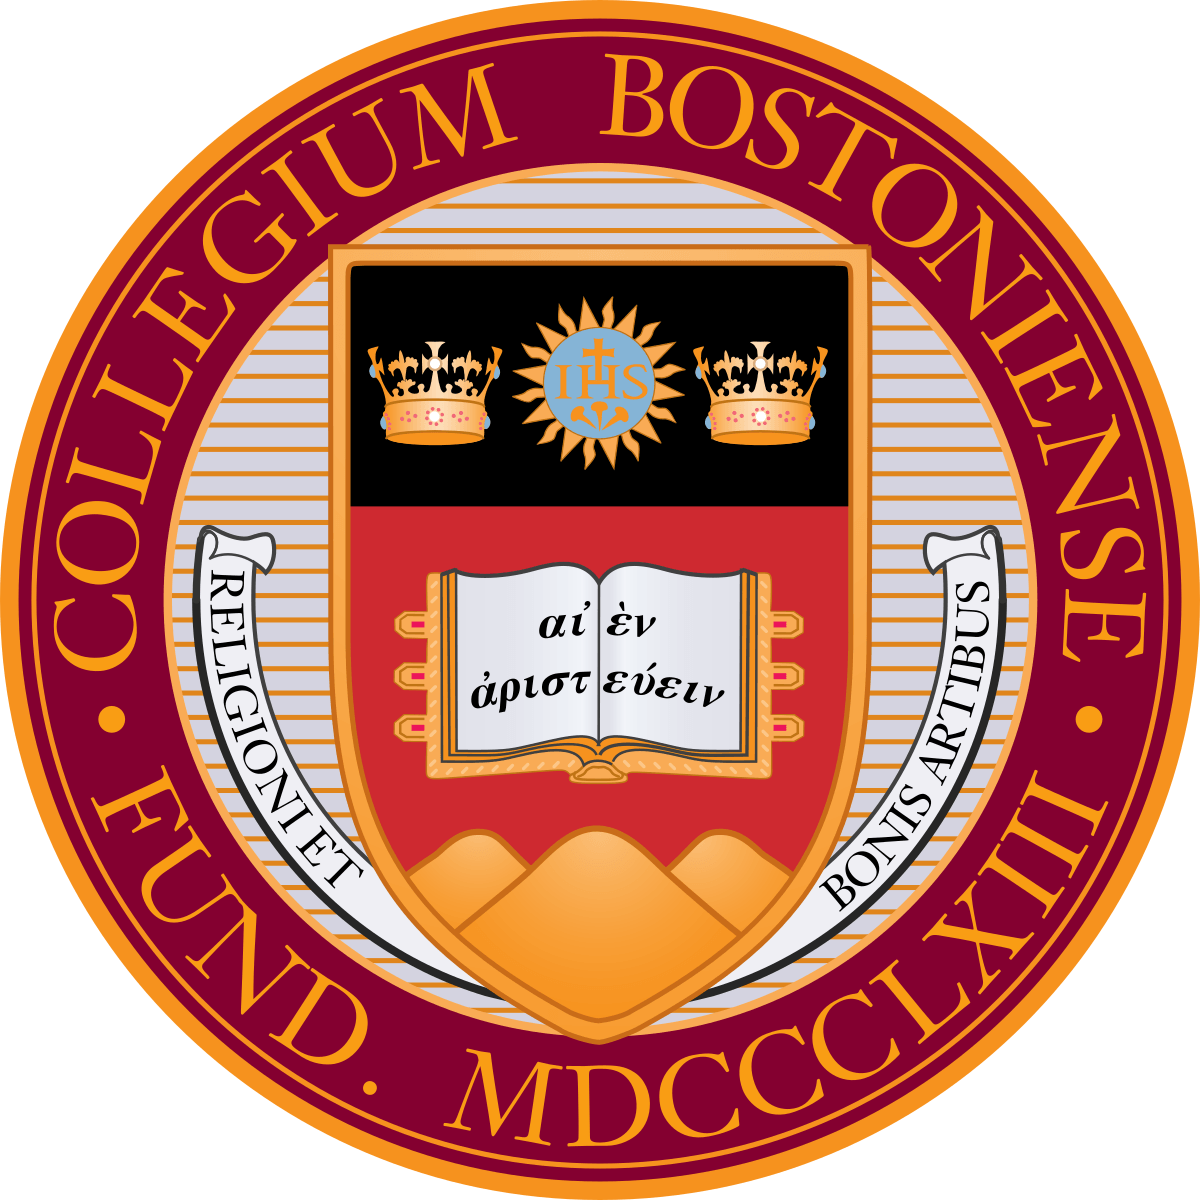 Red and Black College Logo - Boston College